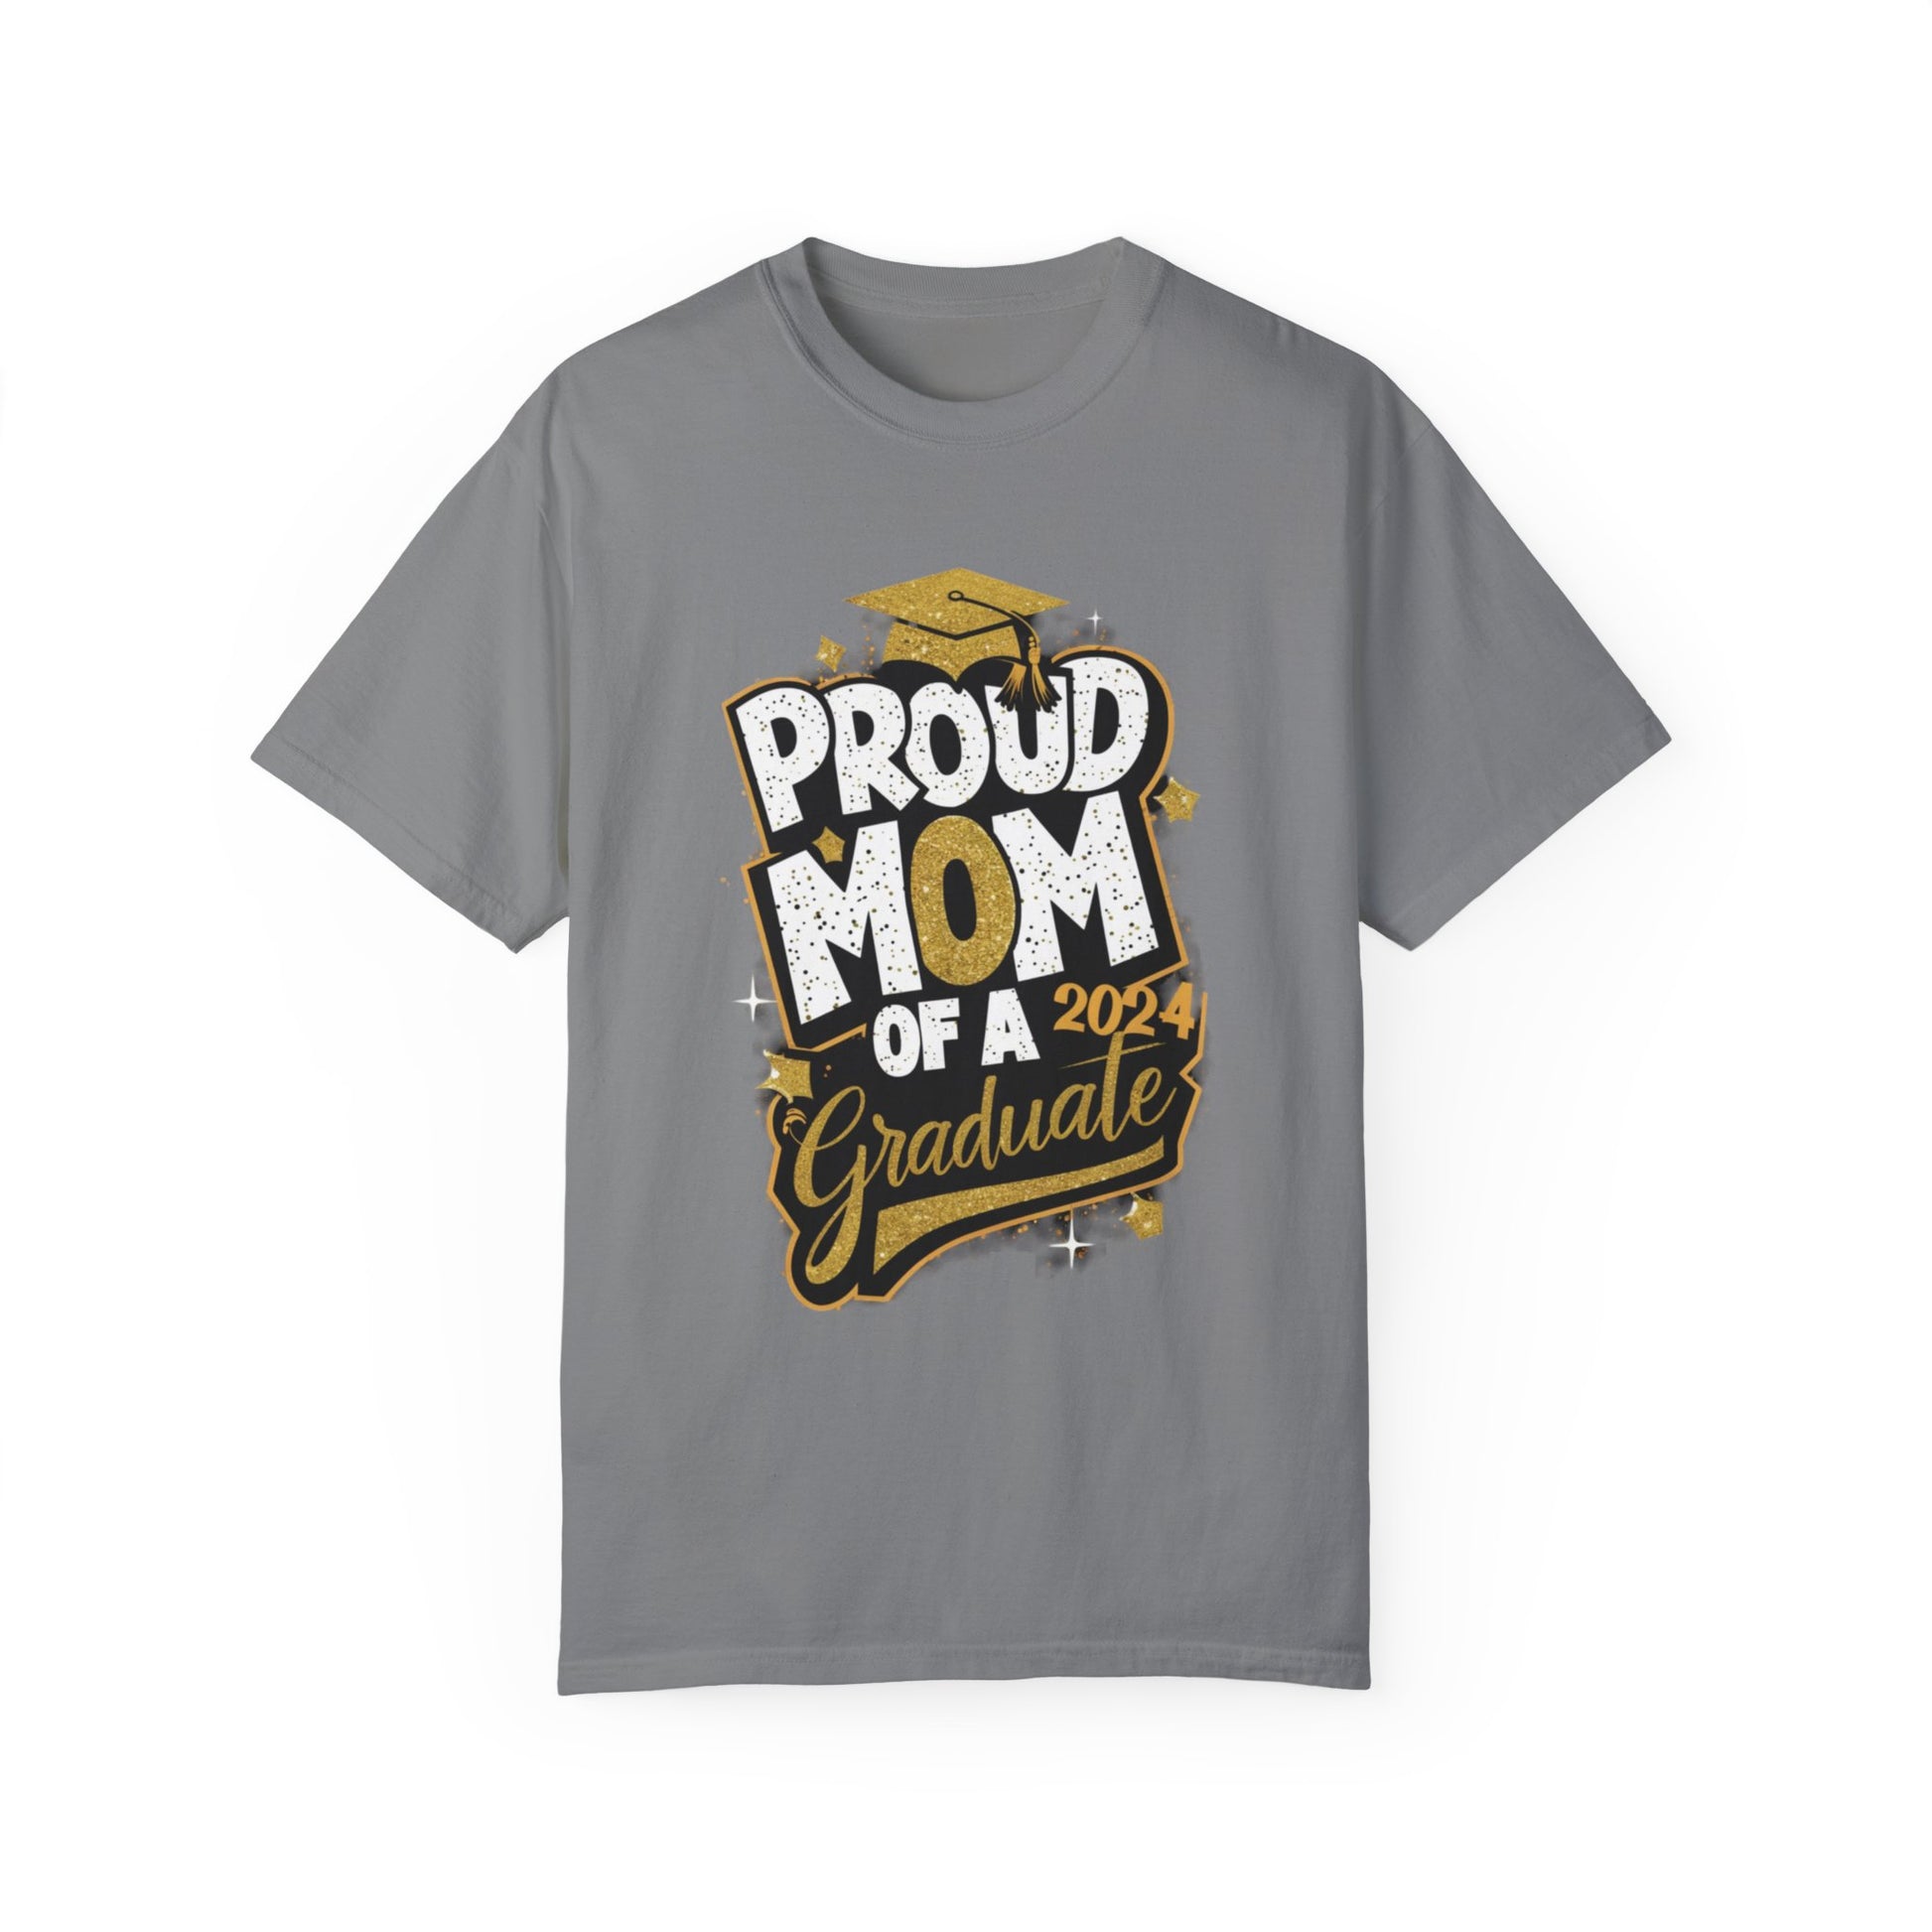 Proud Mom of a 2024 Graduate Unisex Garment-dyed T-shirt Cotton Funny Humorous Graphic Soft Premium Unisex Men Women Grey T-shirt Birthday Gift-9